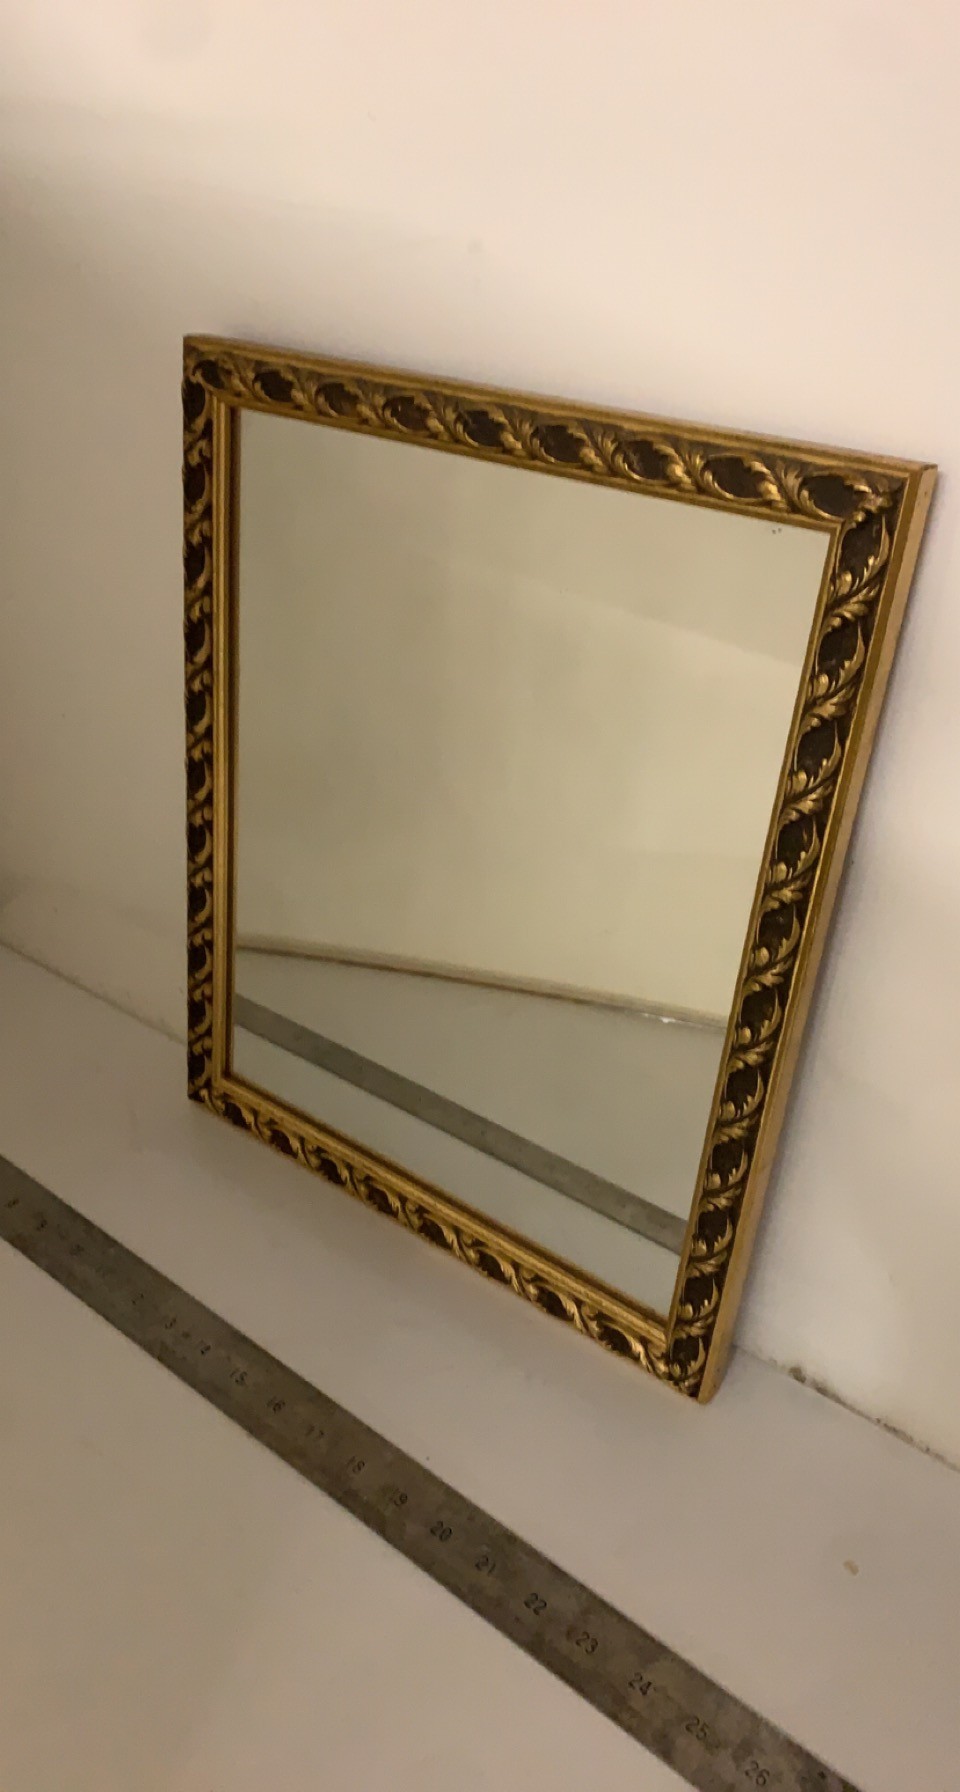 Small gold framed mirror